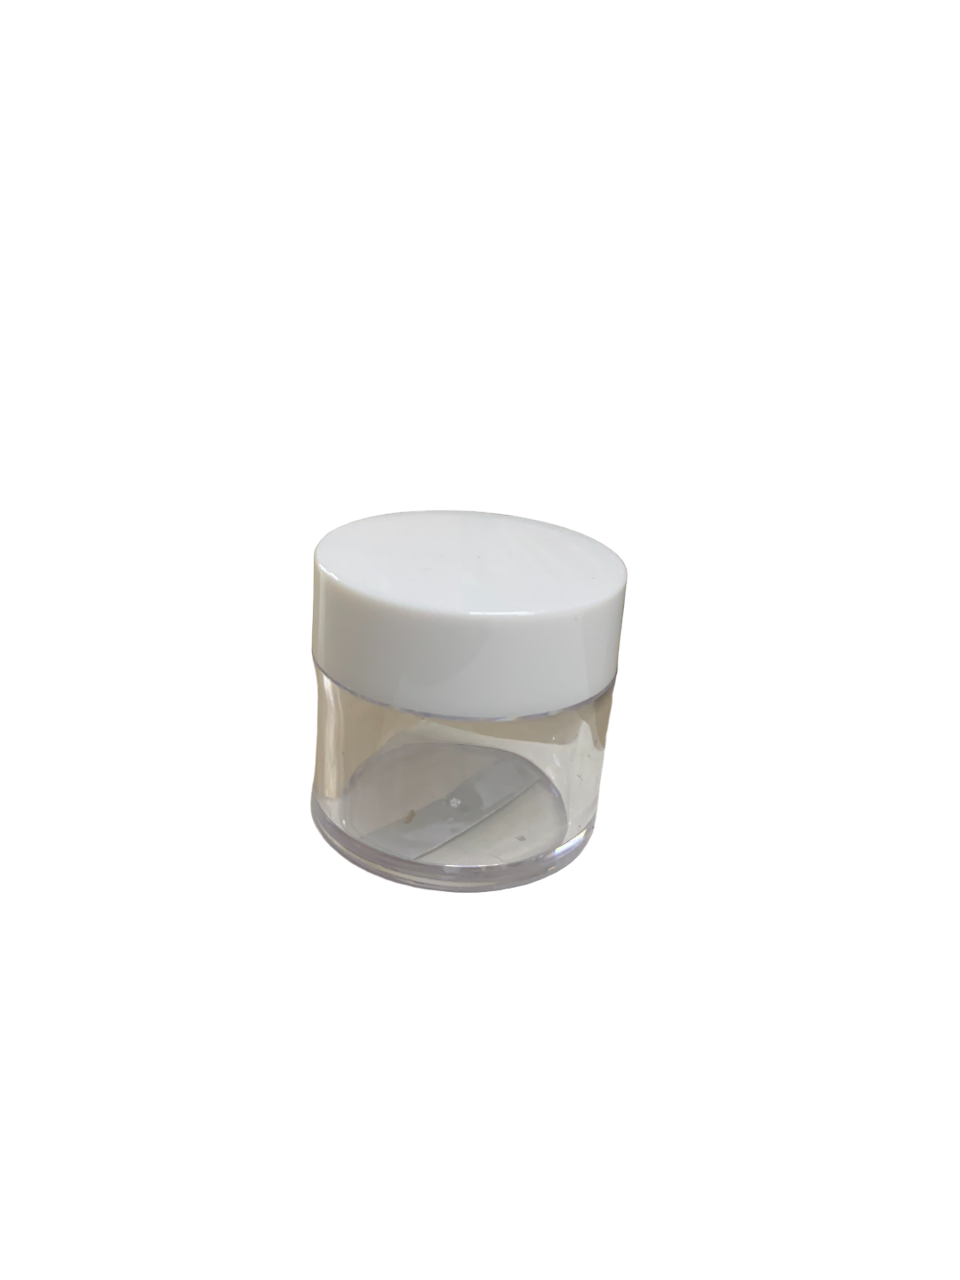 White Cap Plastic Powder Jar 1oz